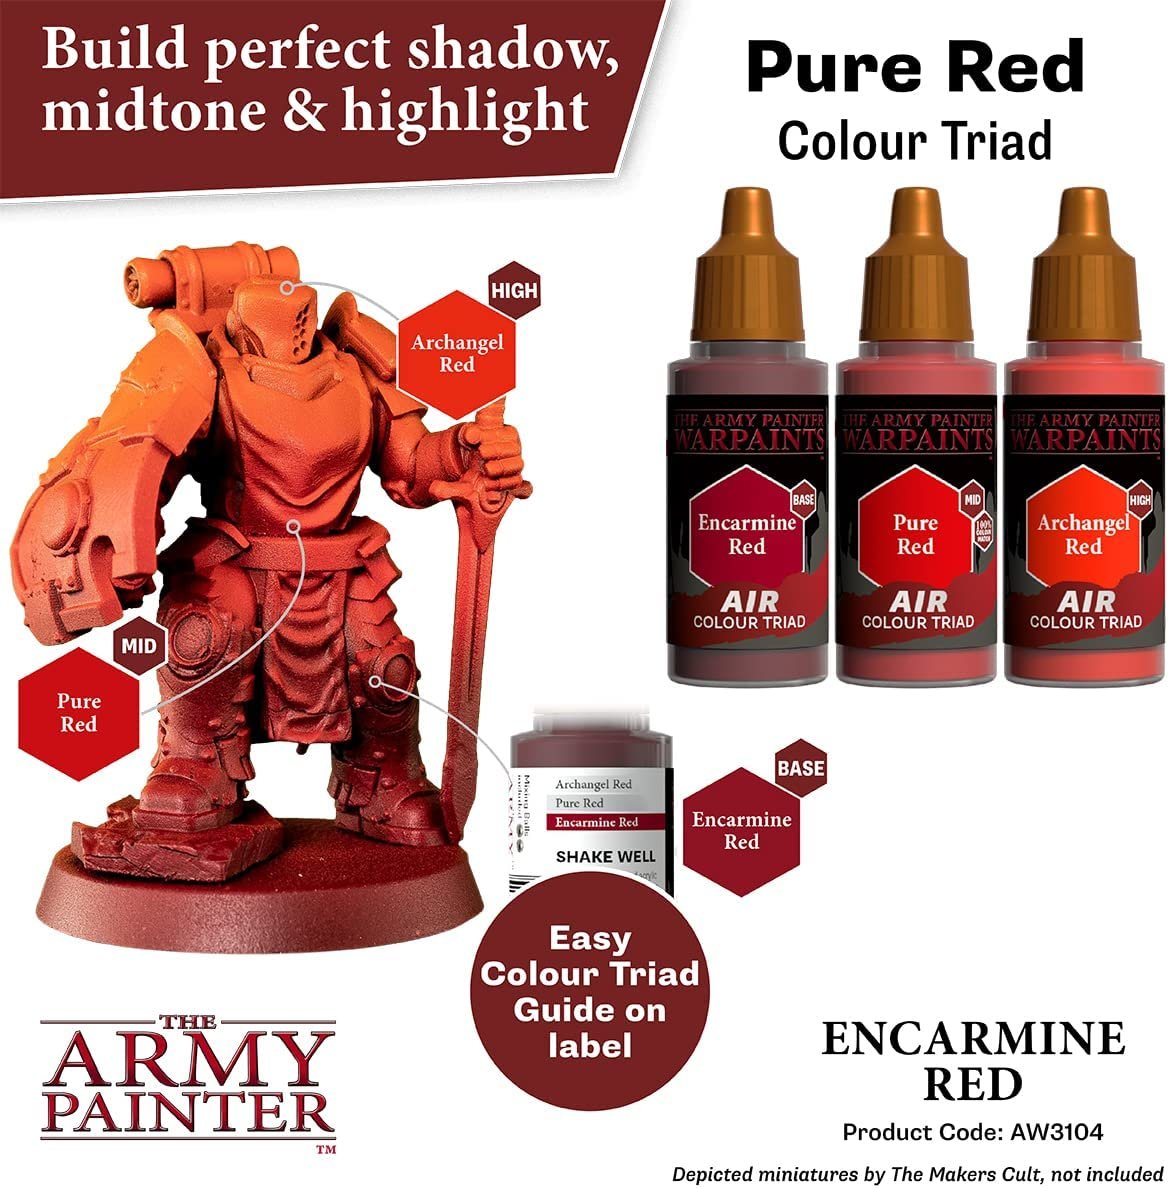 The Army Painter - Warpaints Air: Encarmine Red (18ml/0.6oz)